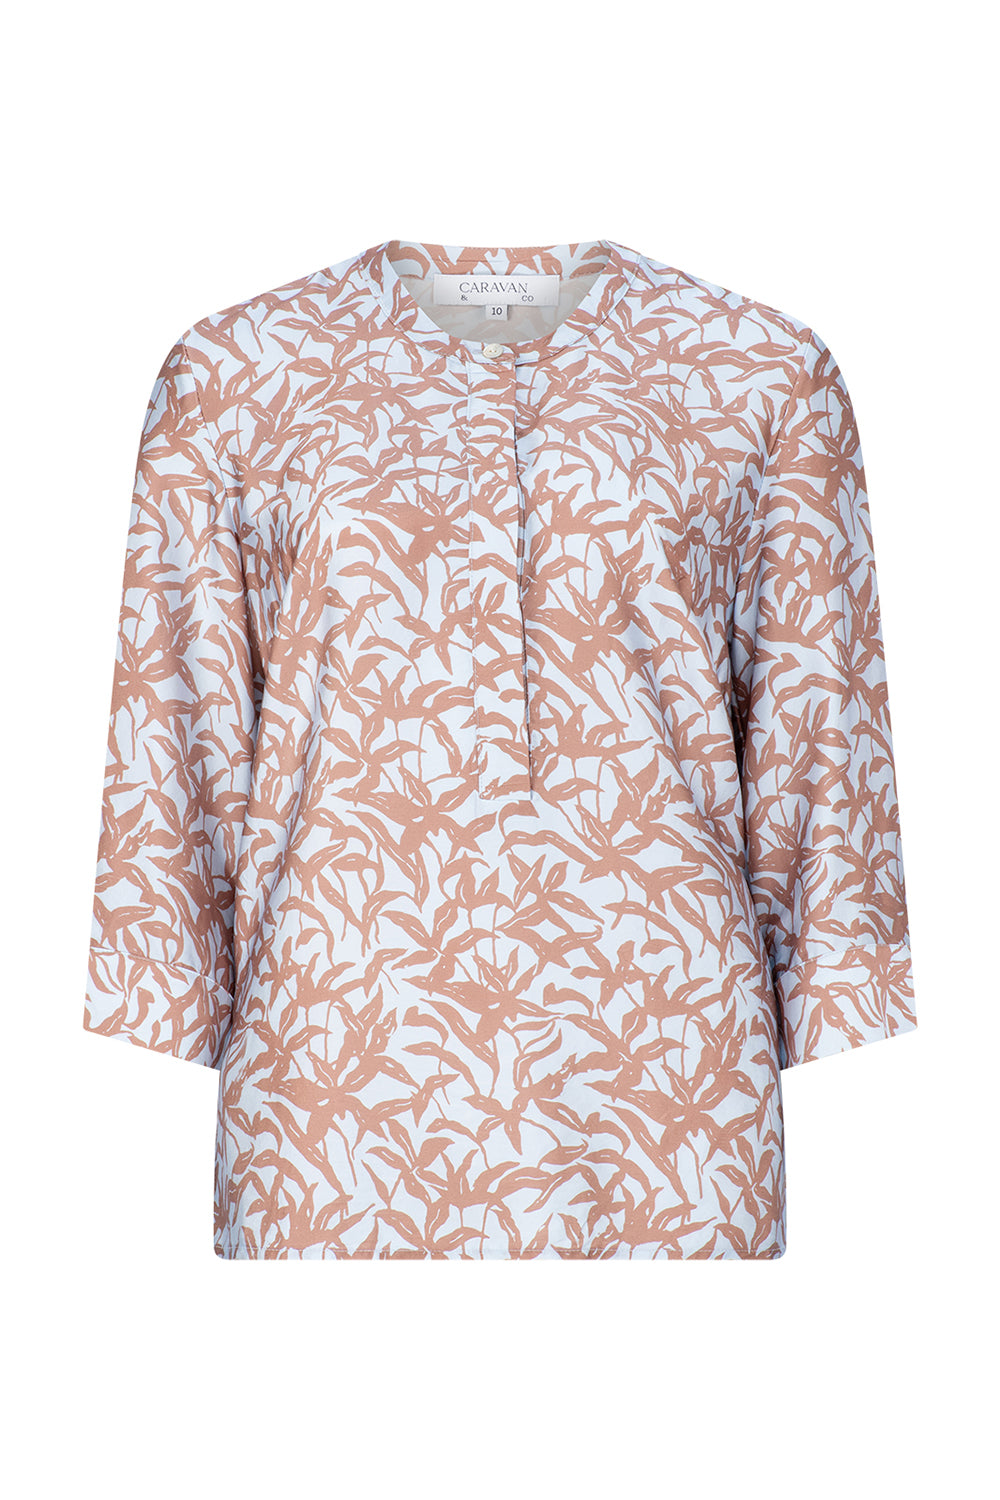 Caravan & Co Mirabella Print Silk Collar Shirt CT182p